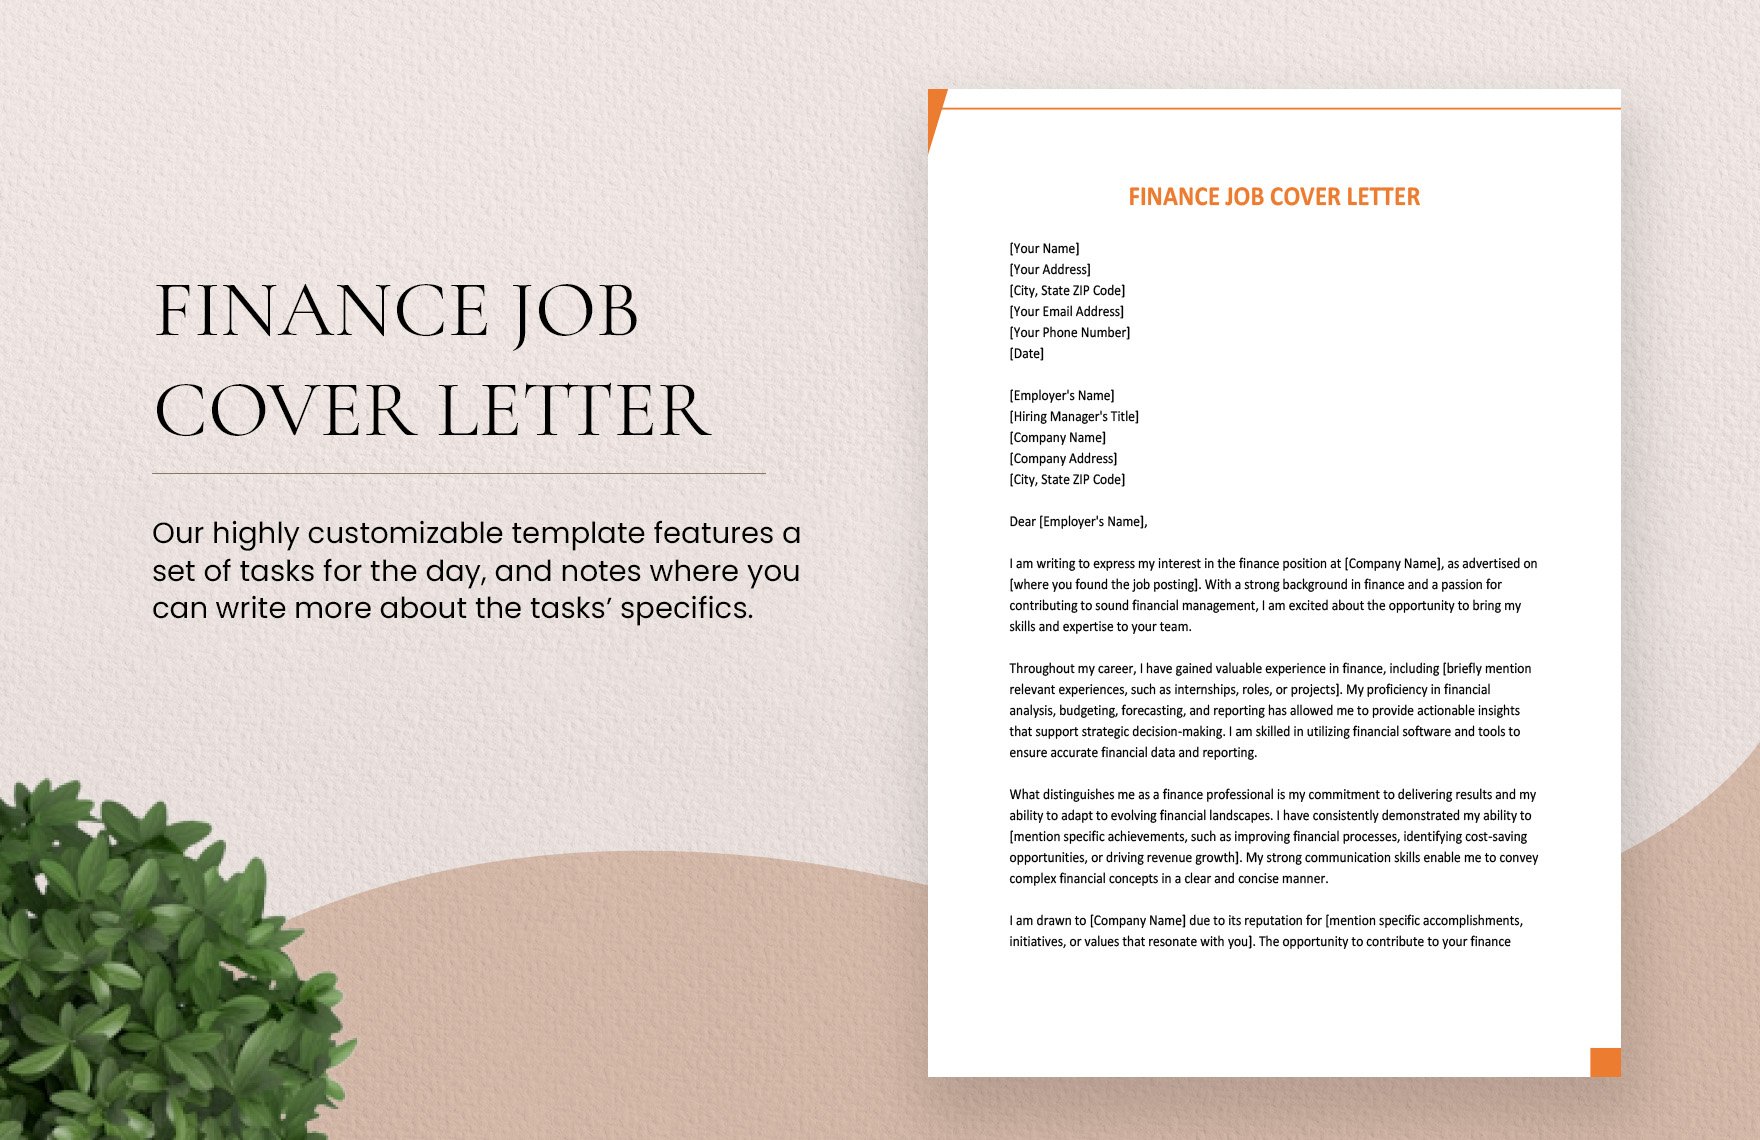 Finance Job Cover Letter in Word, Google Docs